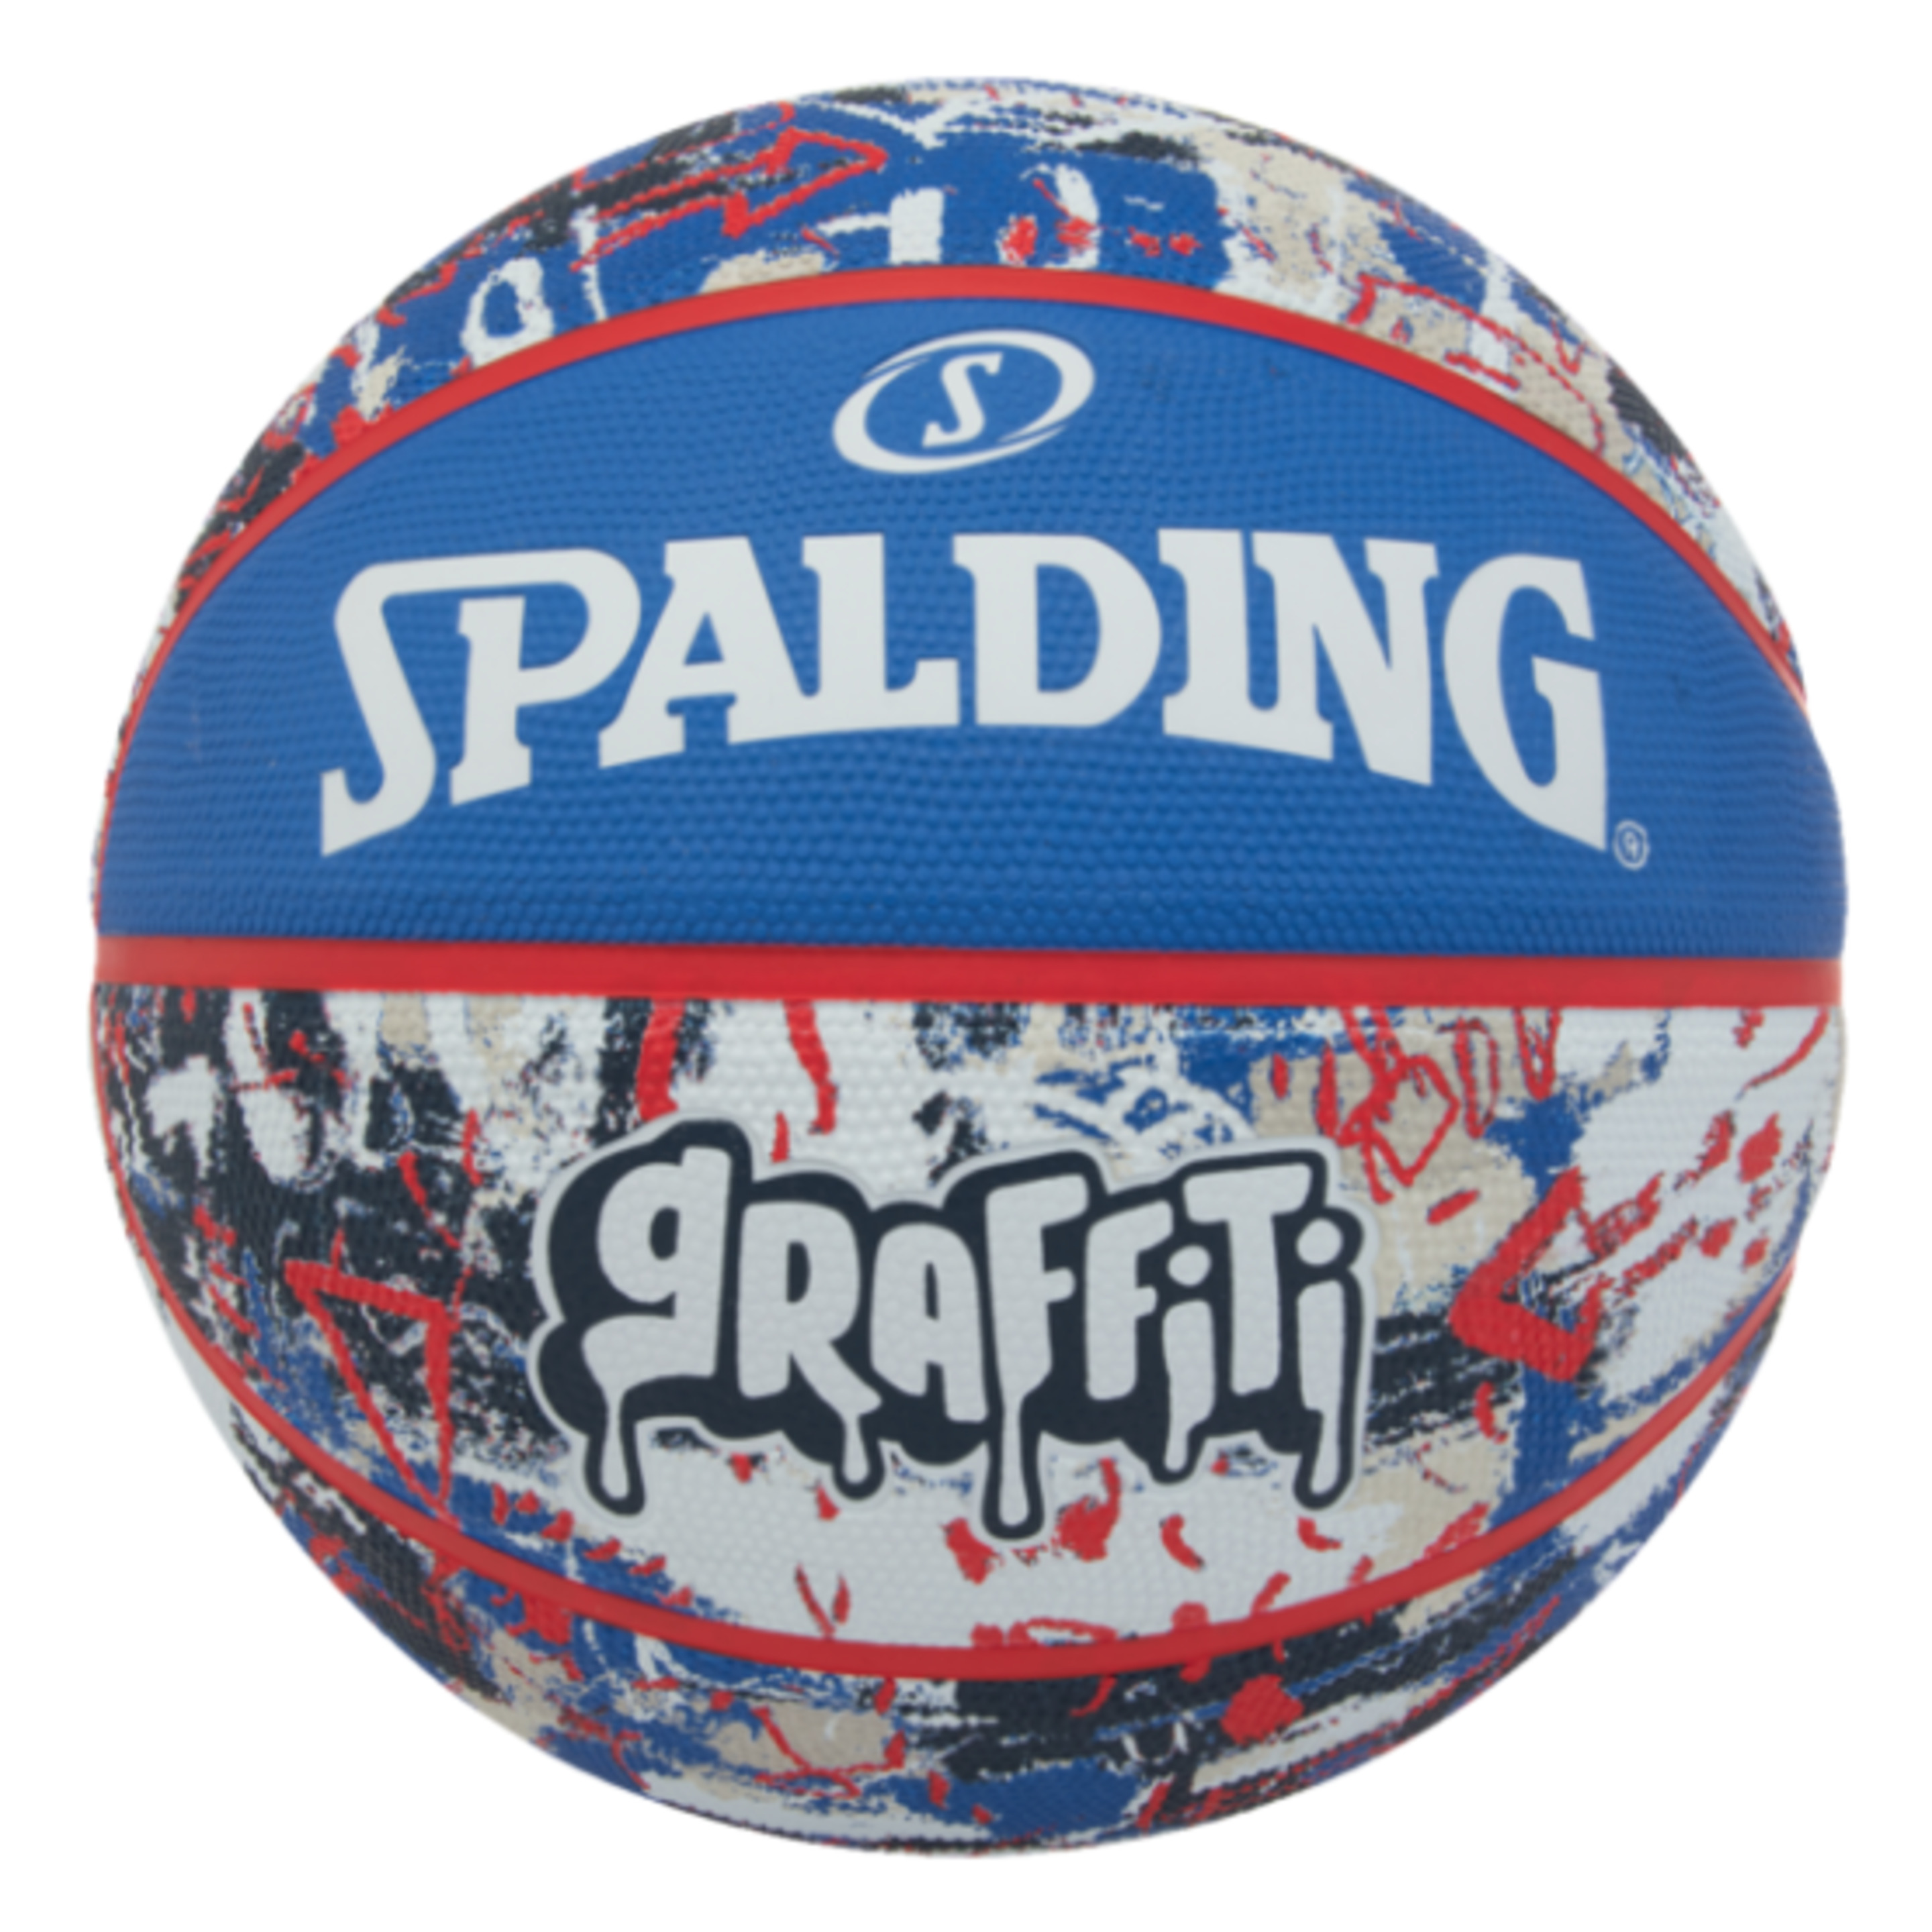 Spalding Grafitti Azul-vermelho Sz7 Basquetebol - azul-rojo - 